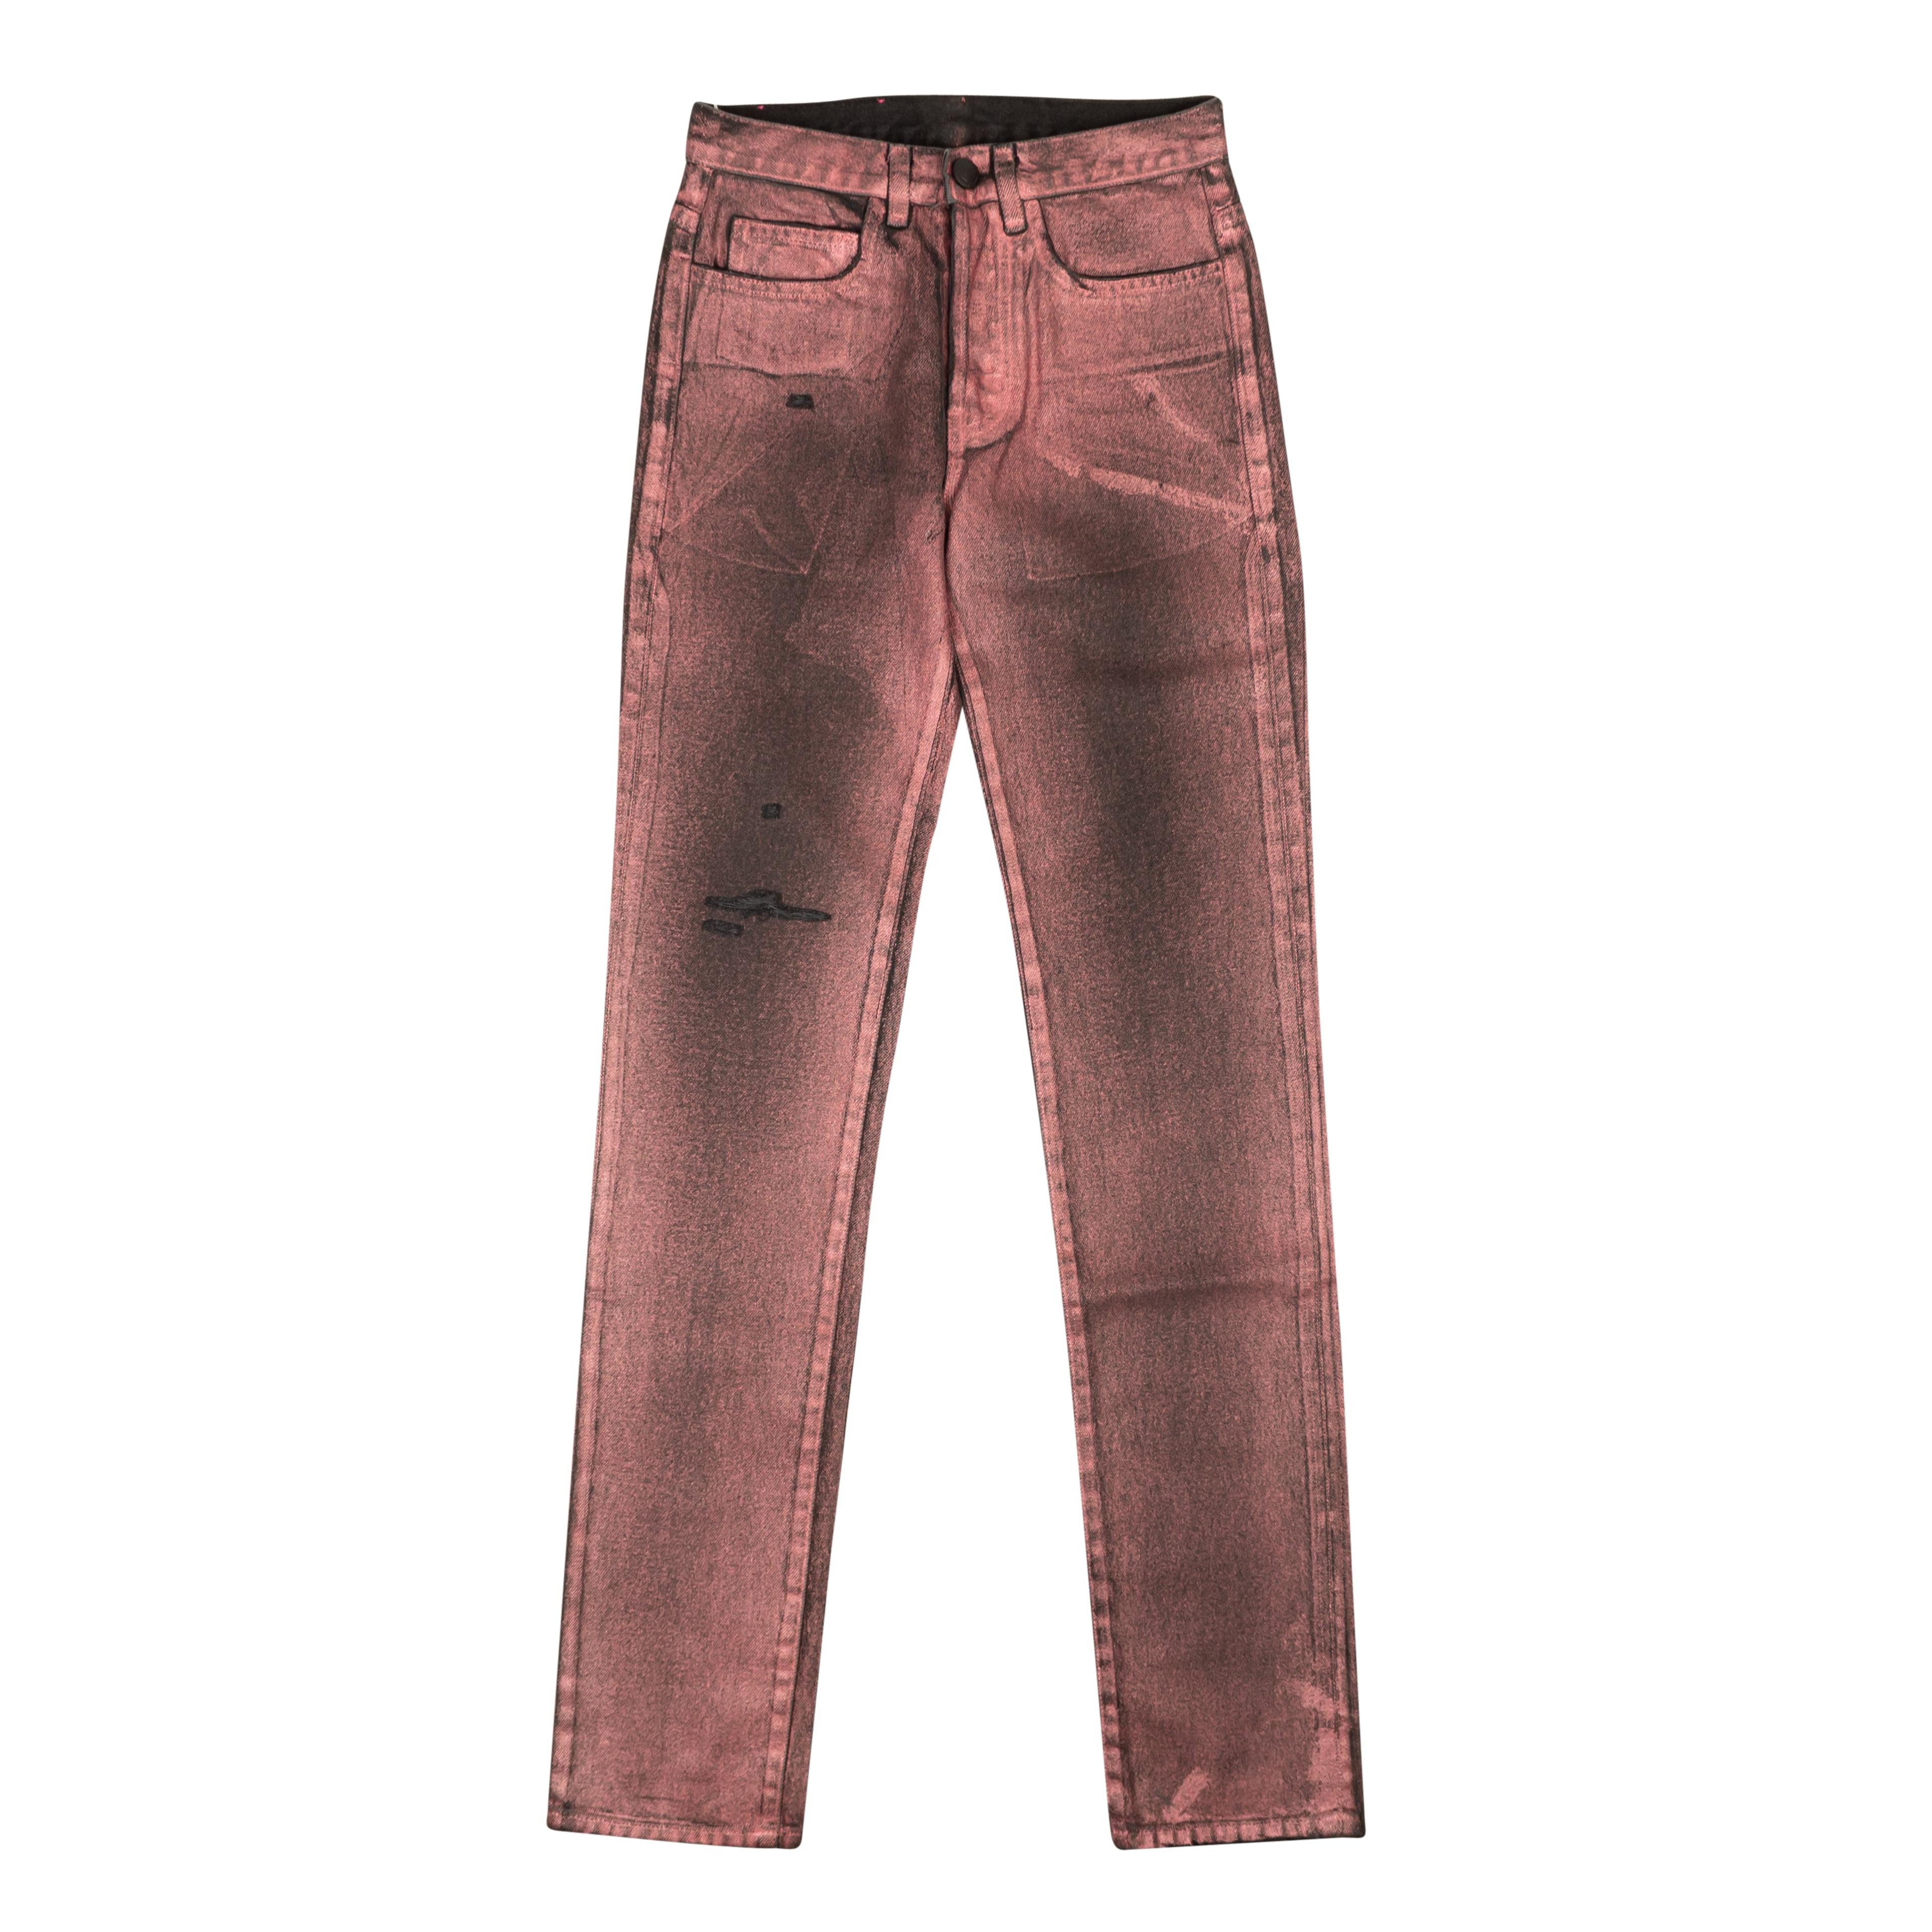 Black And Pink Metallic Wash Jeans